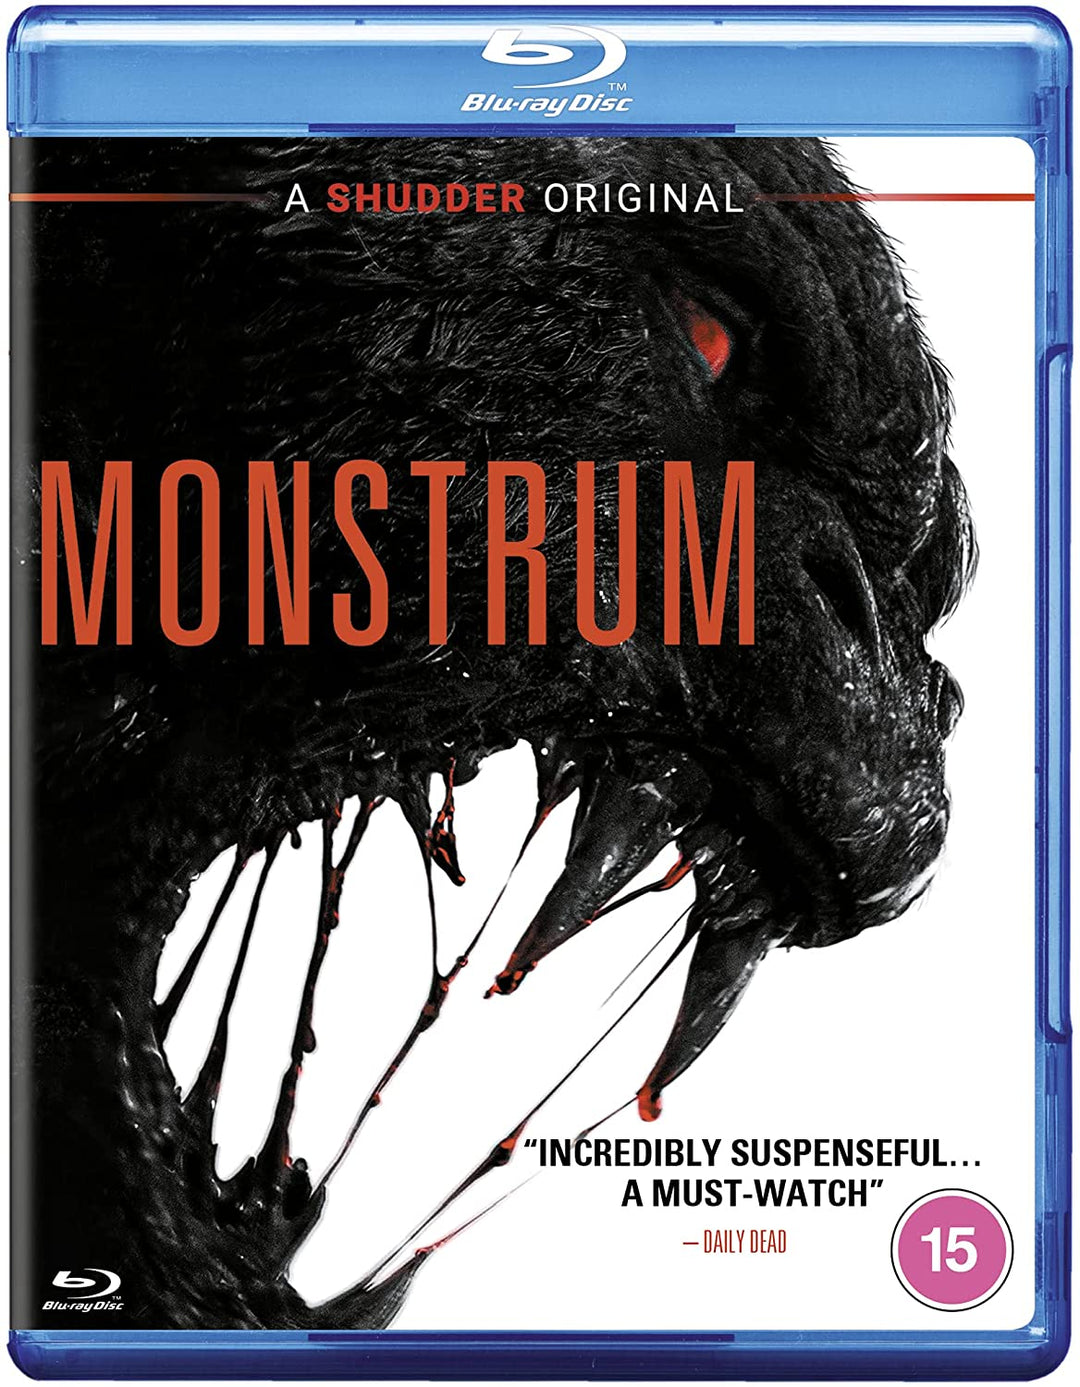 Monstrum (SHUDDER) [2018]  -Action/Fantasy [Blu-ray]